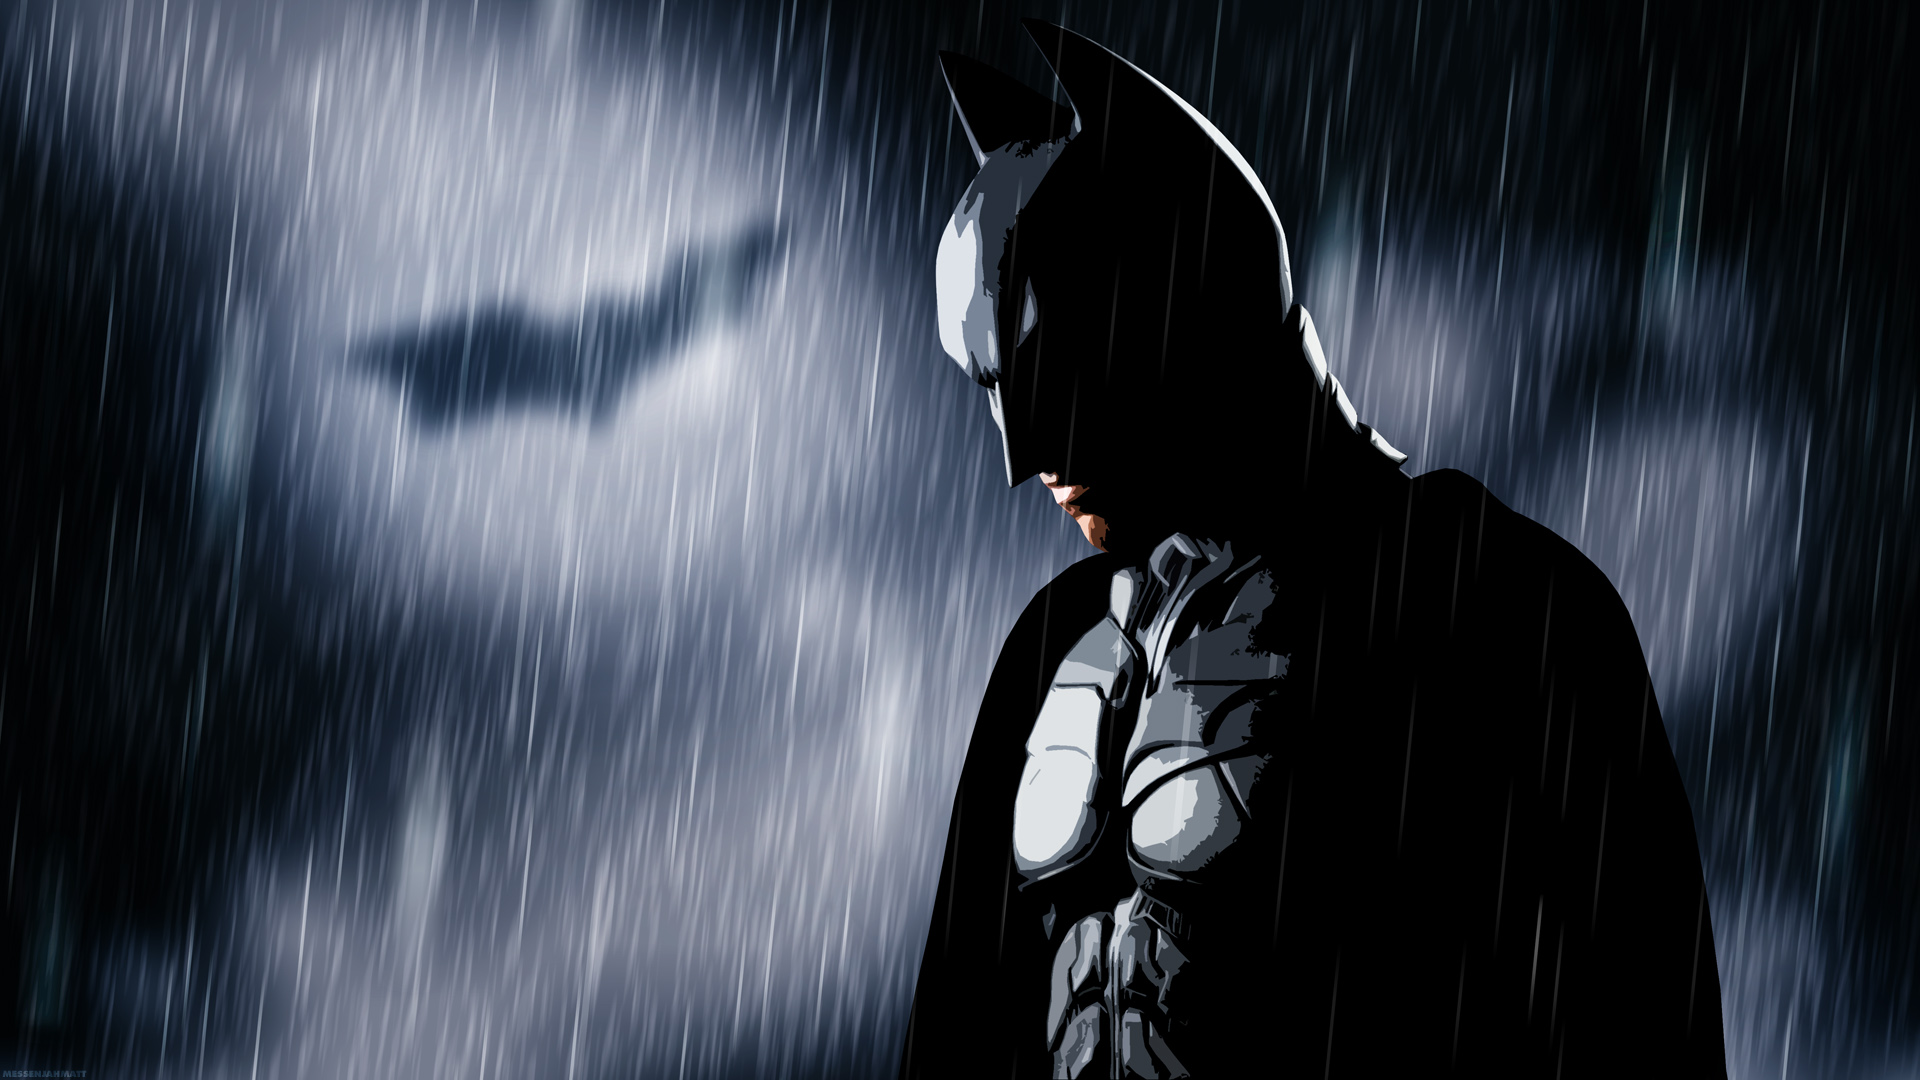 The Dark Knight HD Wallpaper by MessenjahMatt